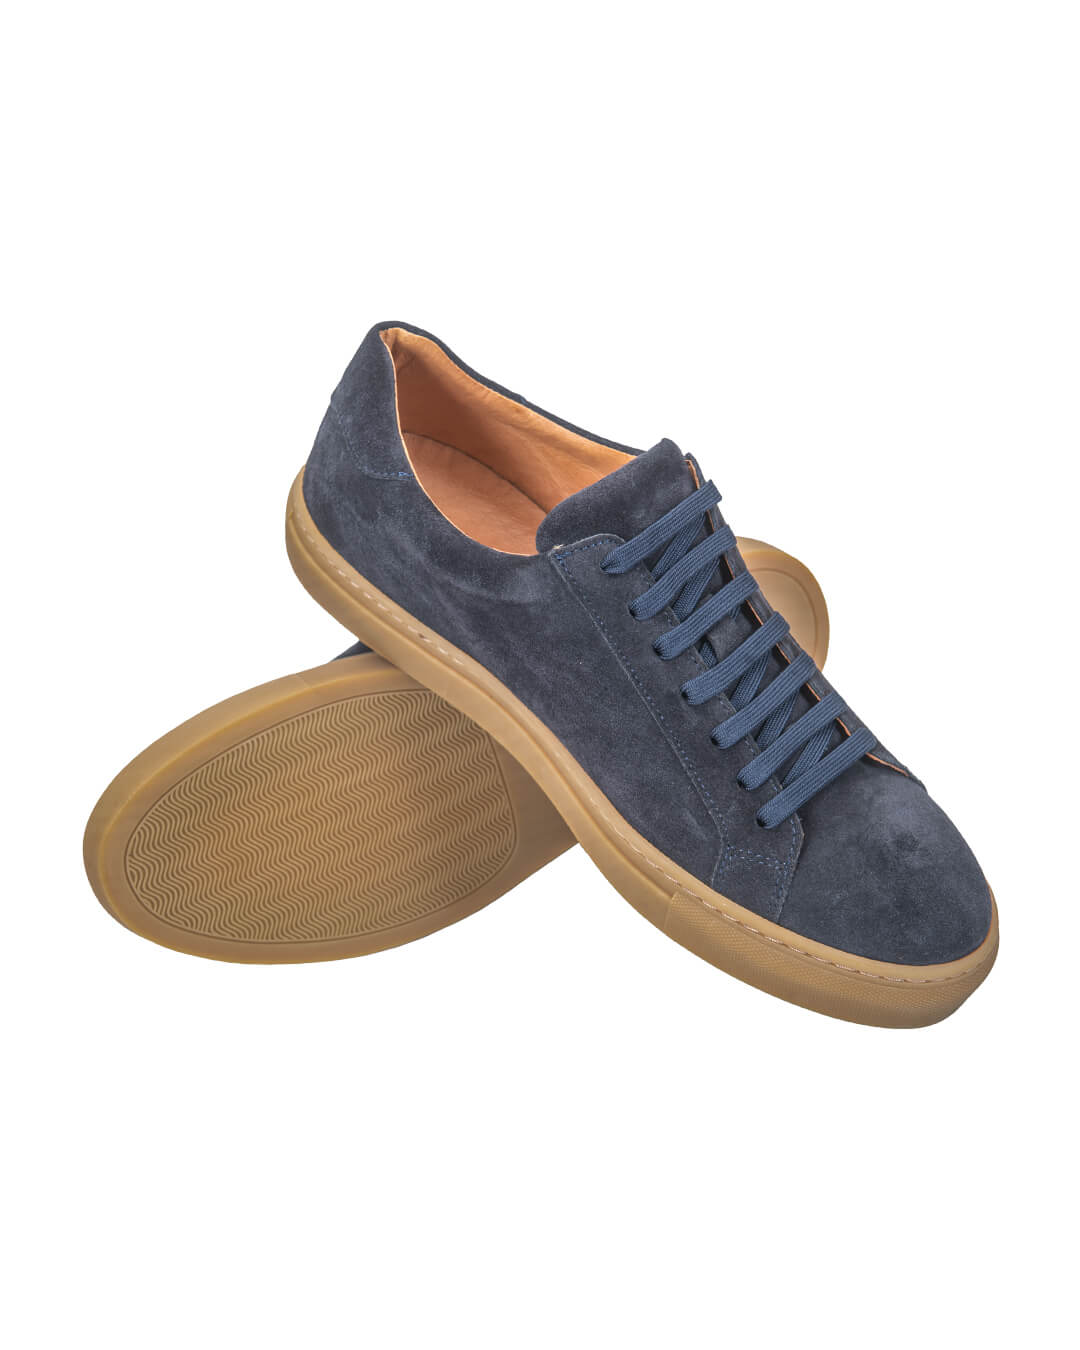 Gagliardi Shoes Sneakers Suede Navy4